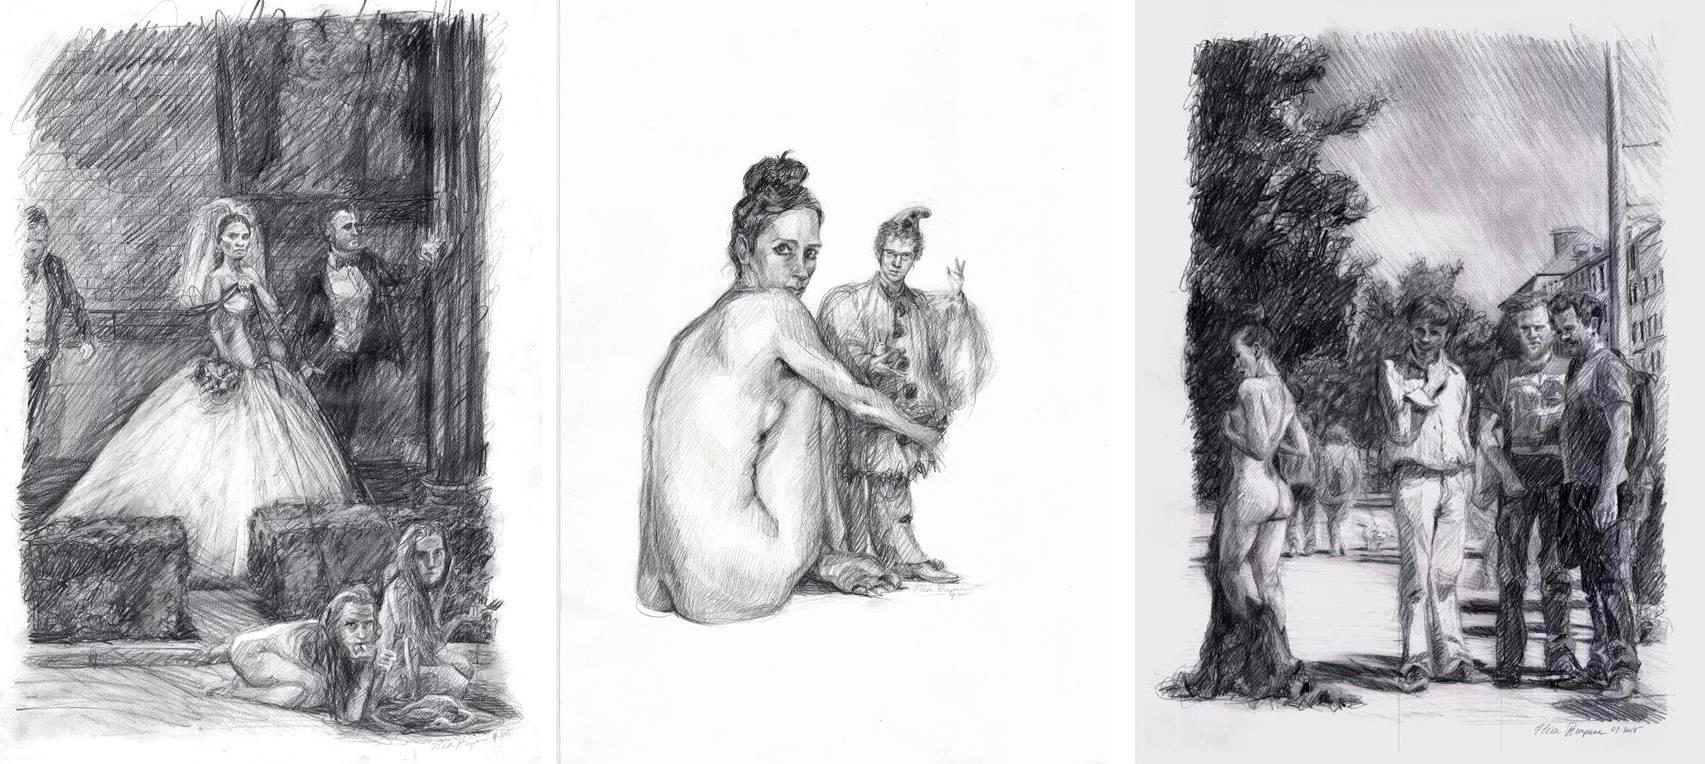 Elisa Pesapane, Triptych from 'Berliner Reise', 2015, 50x40 cm each, pencil on paper.